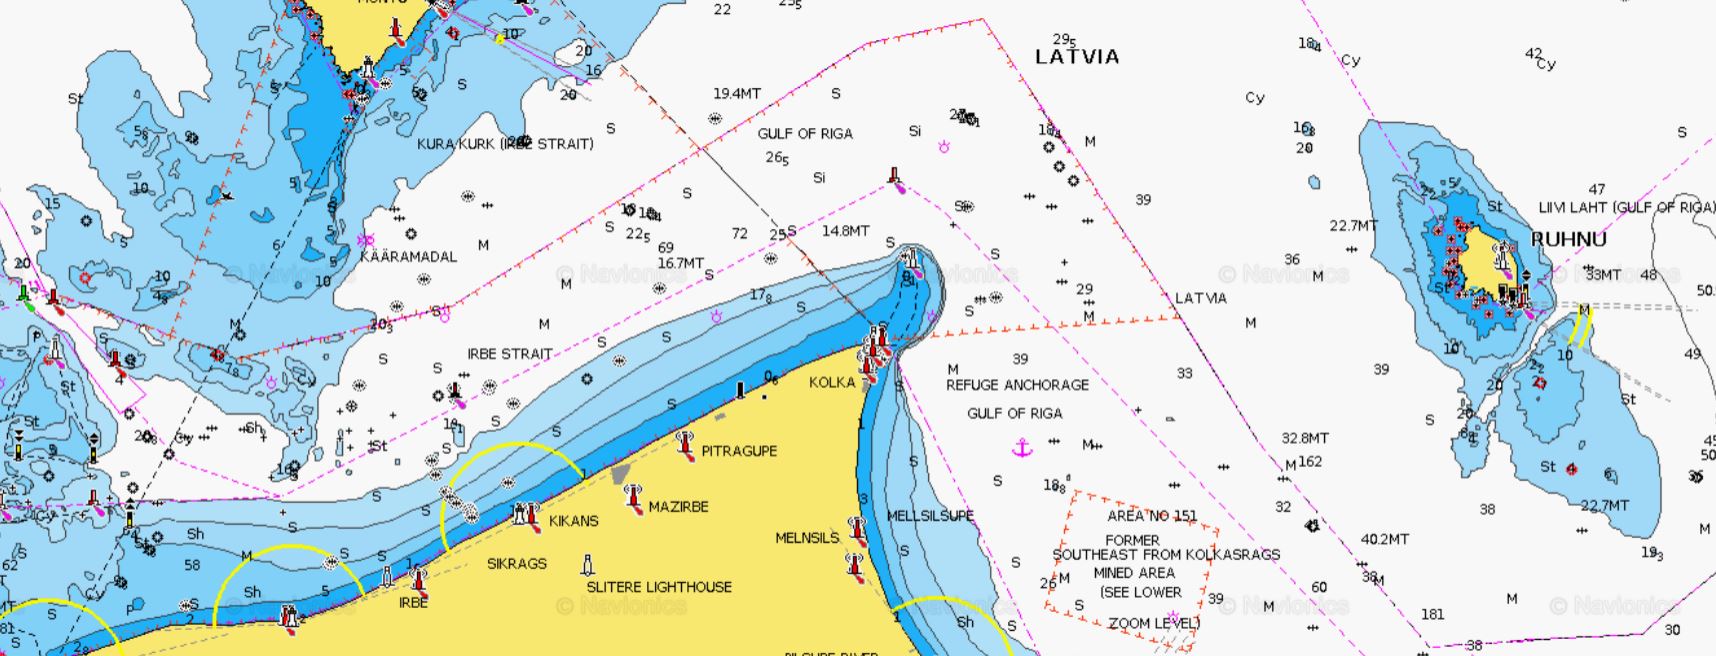 Map of Latvian shipwrecks